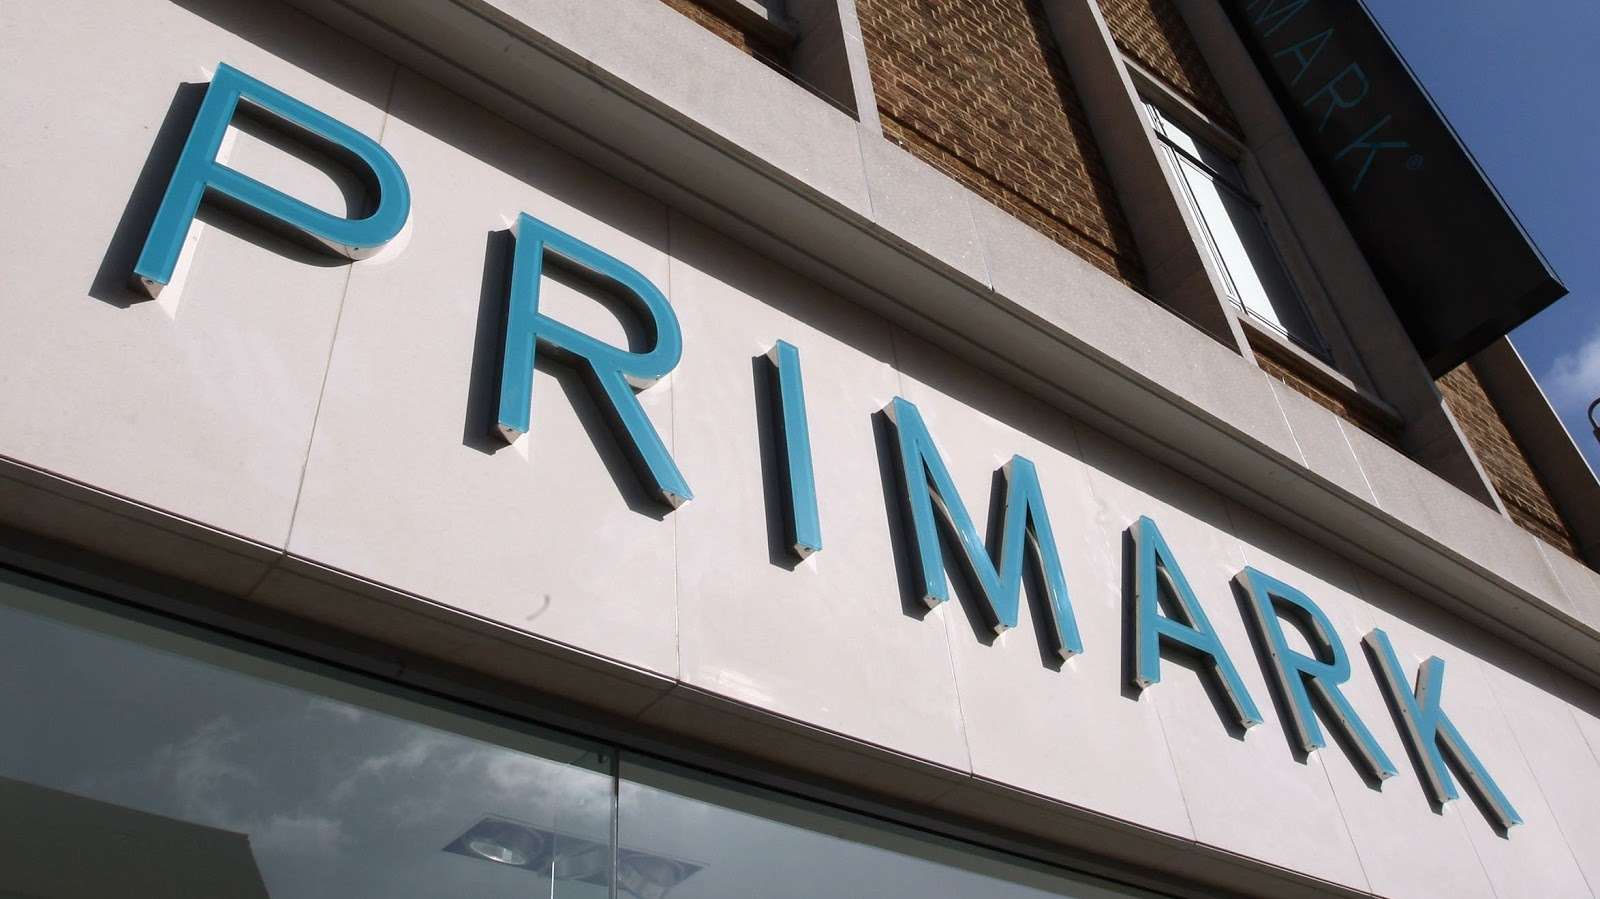 Kent has several Primark stores